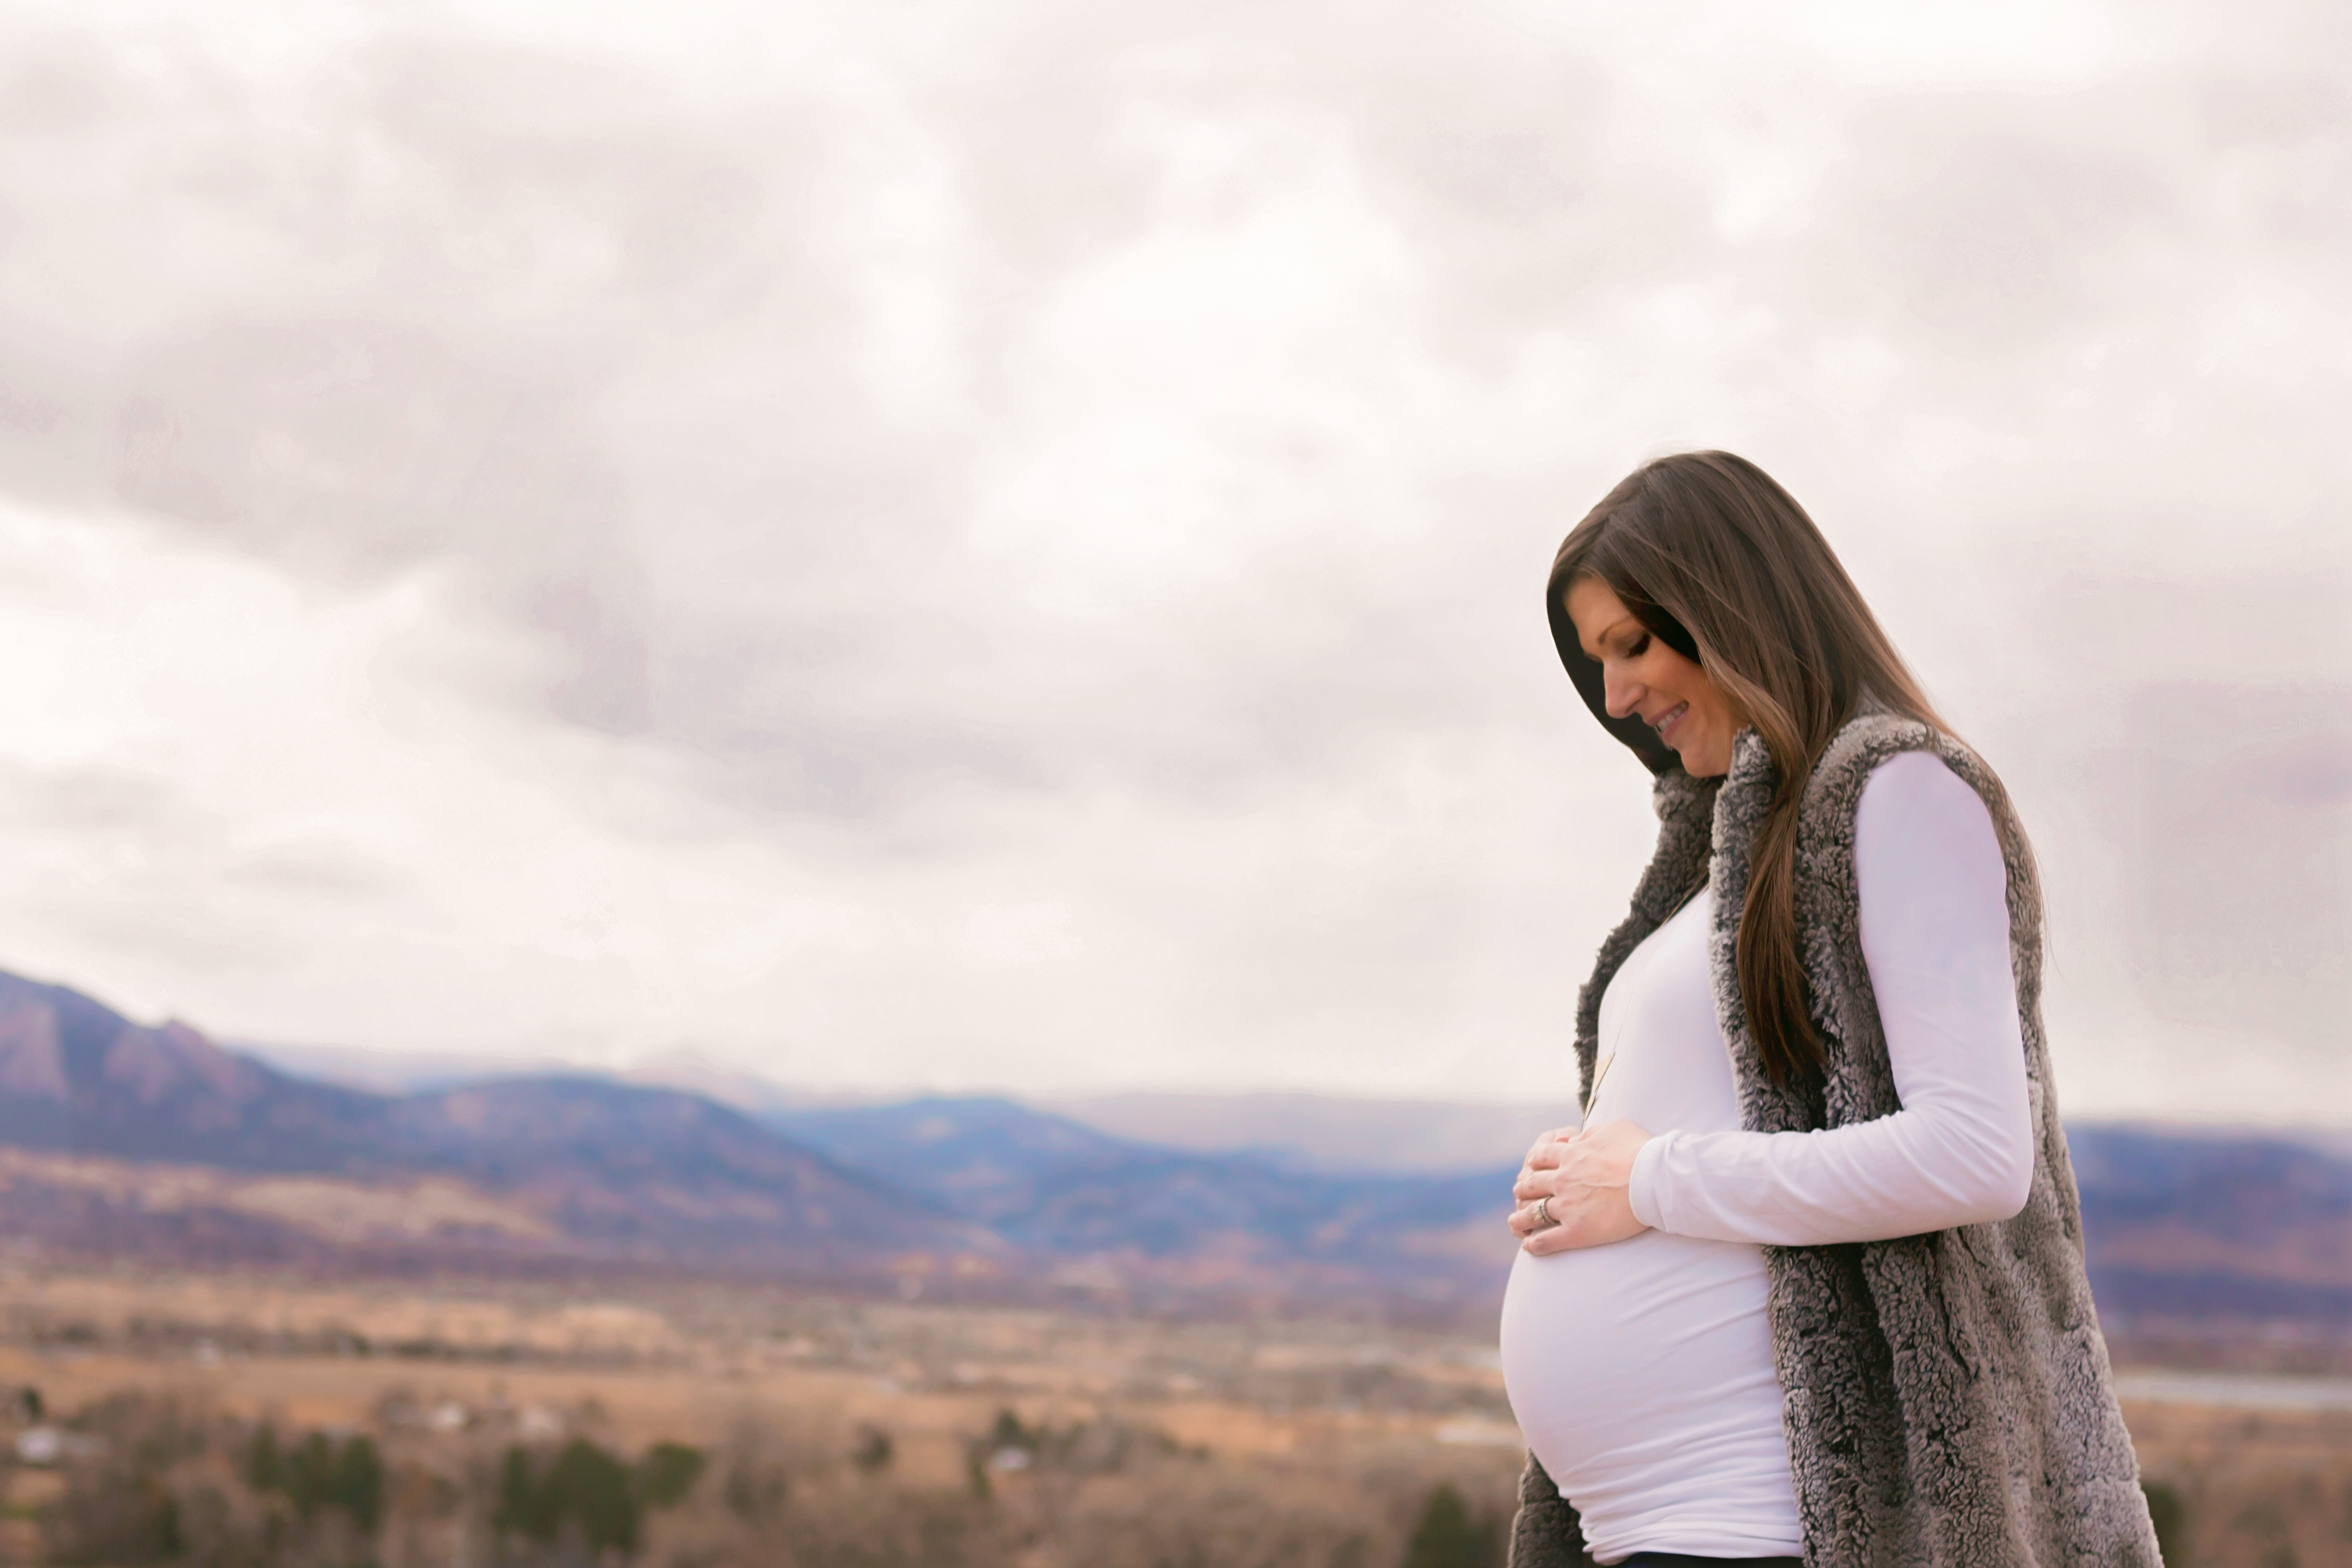 Colorado Maternity Photography